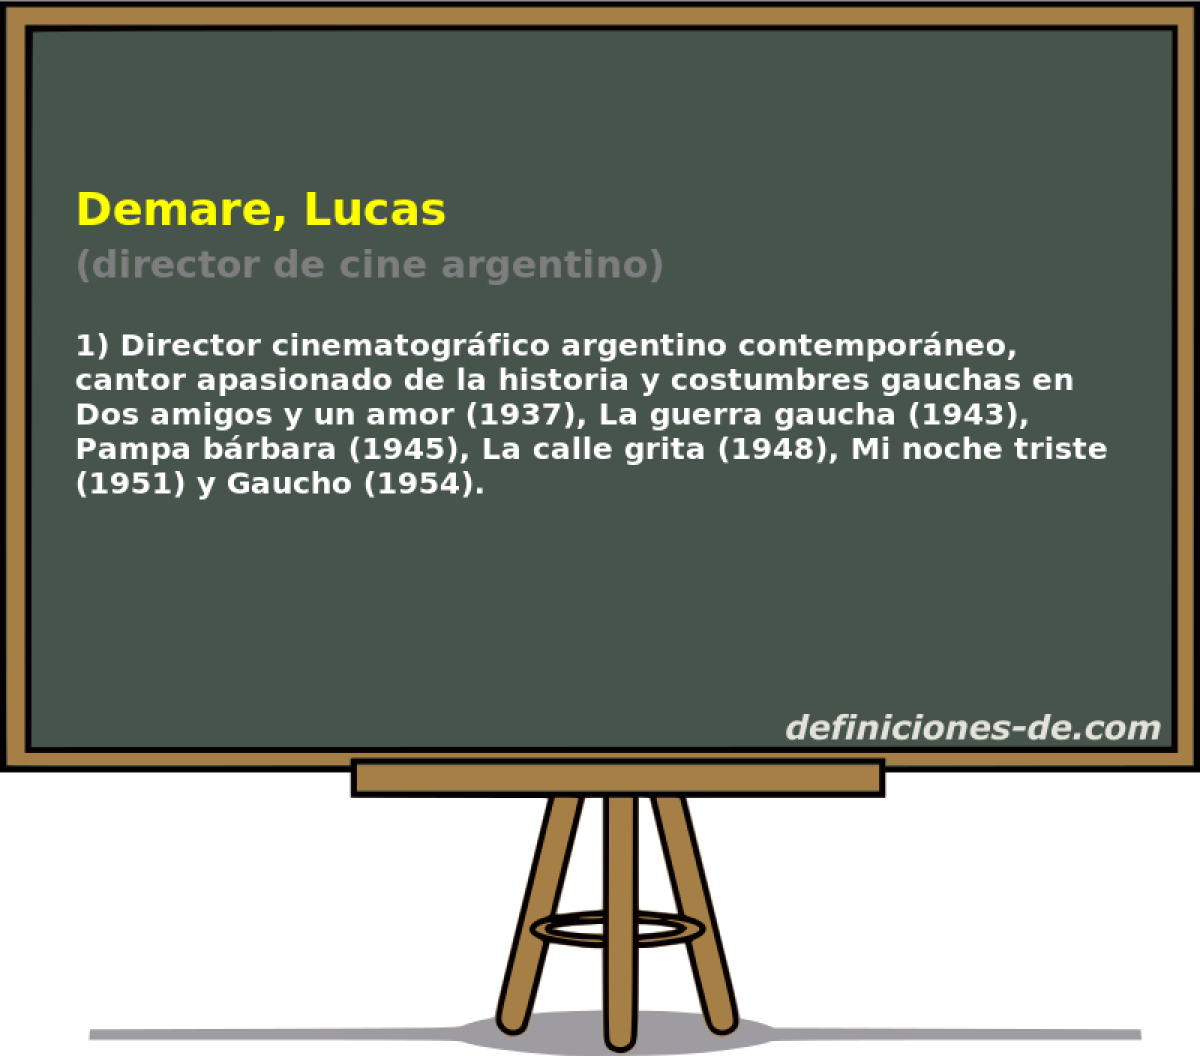 Demare, Lucas (director de cine argentino)